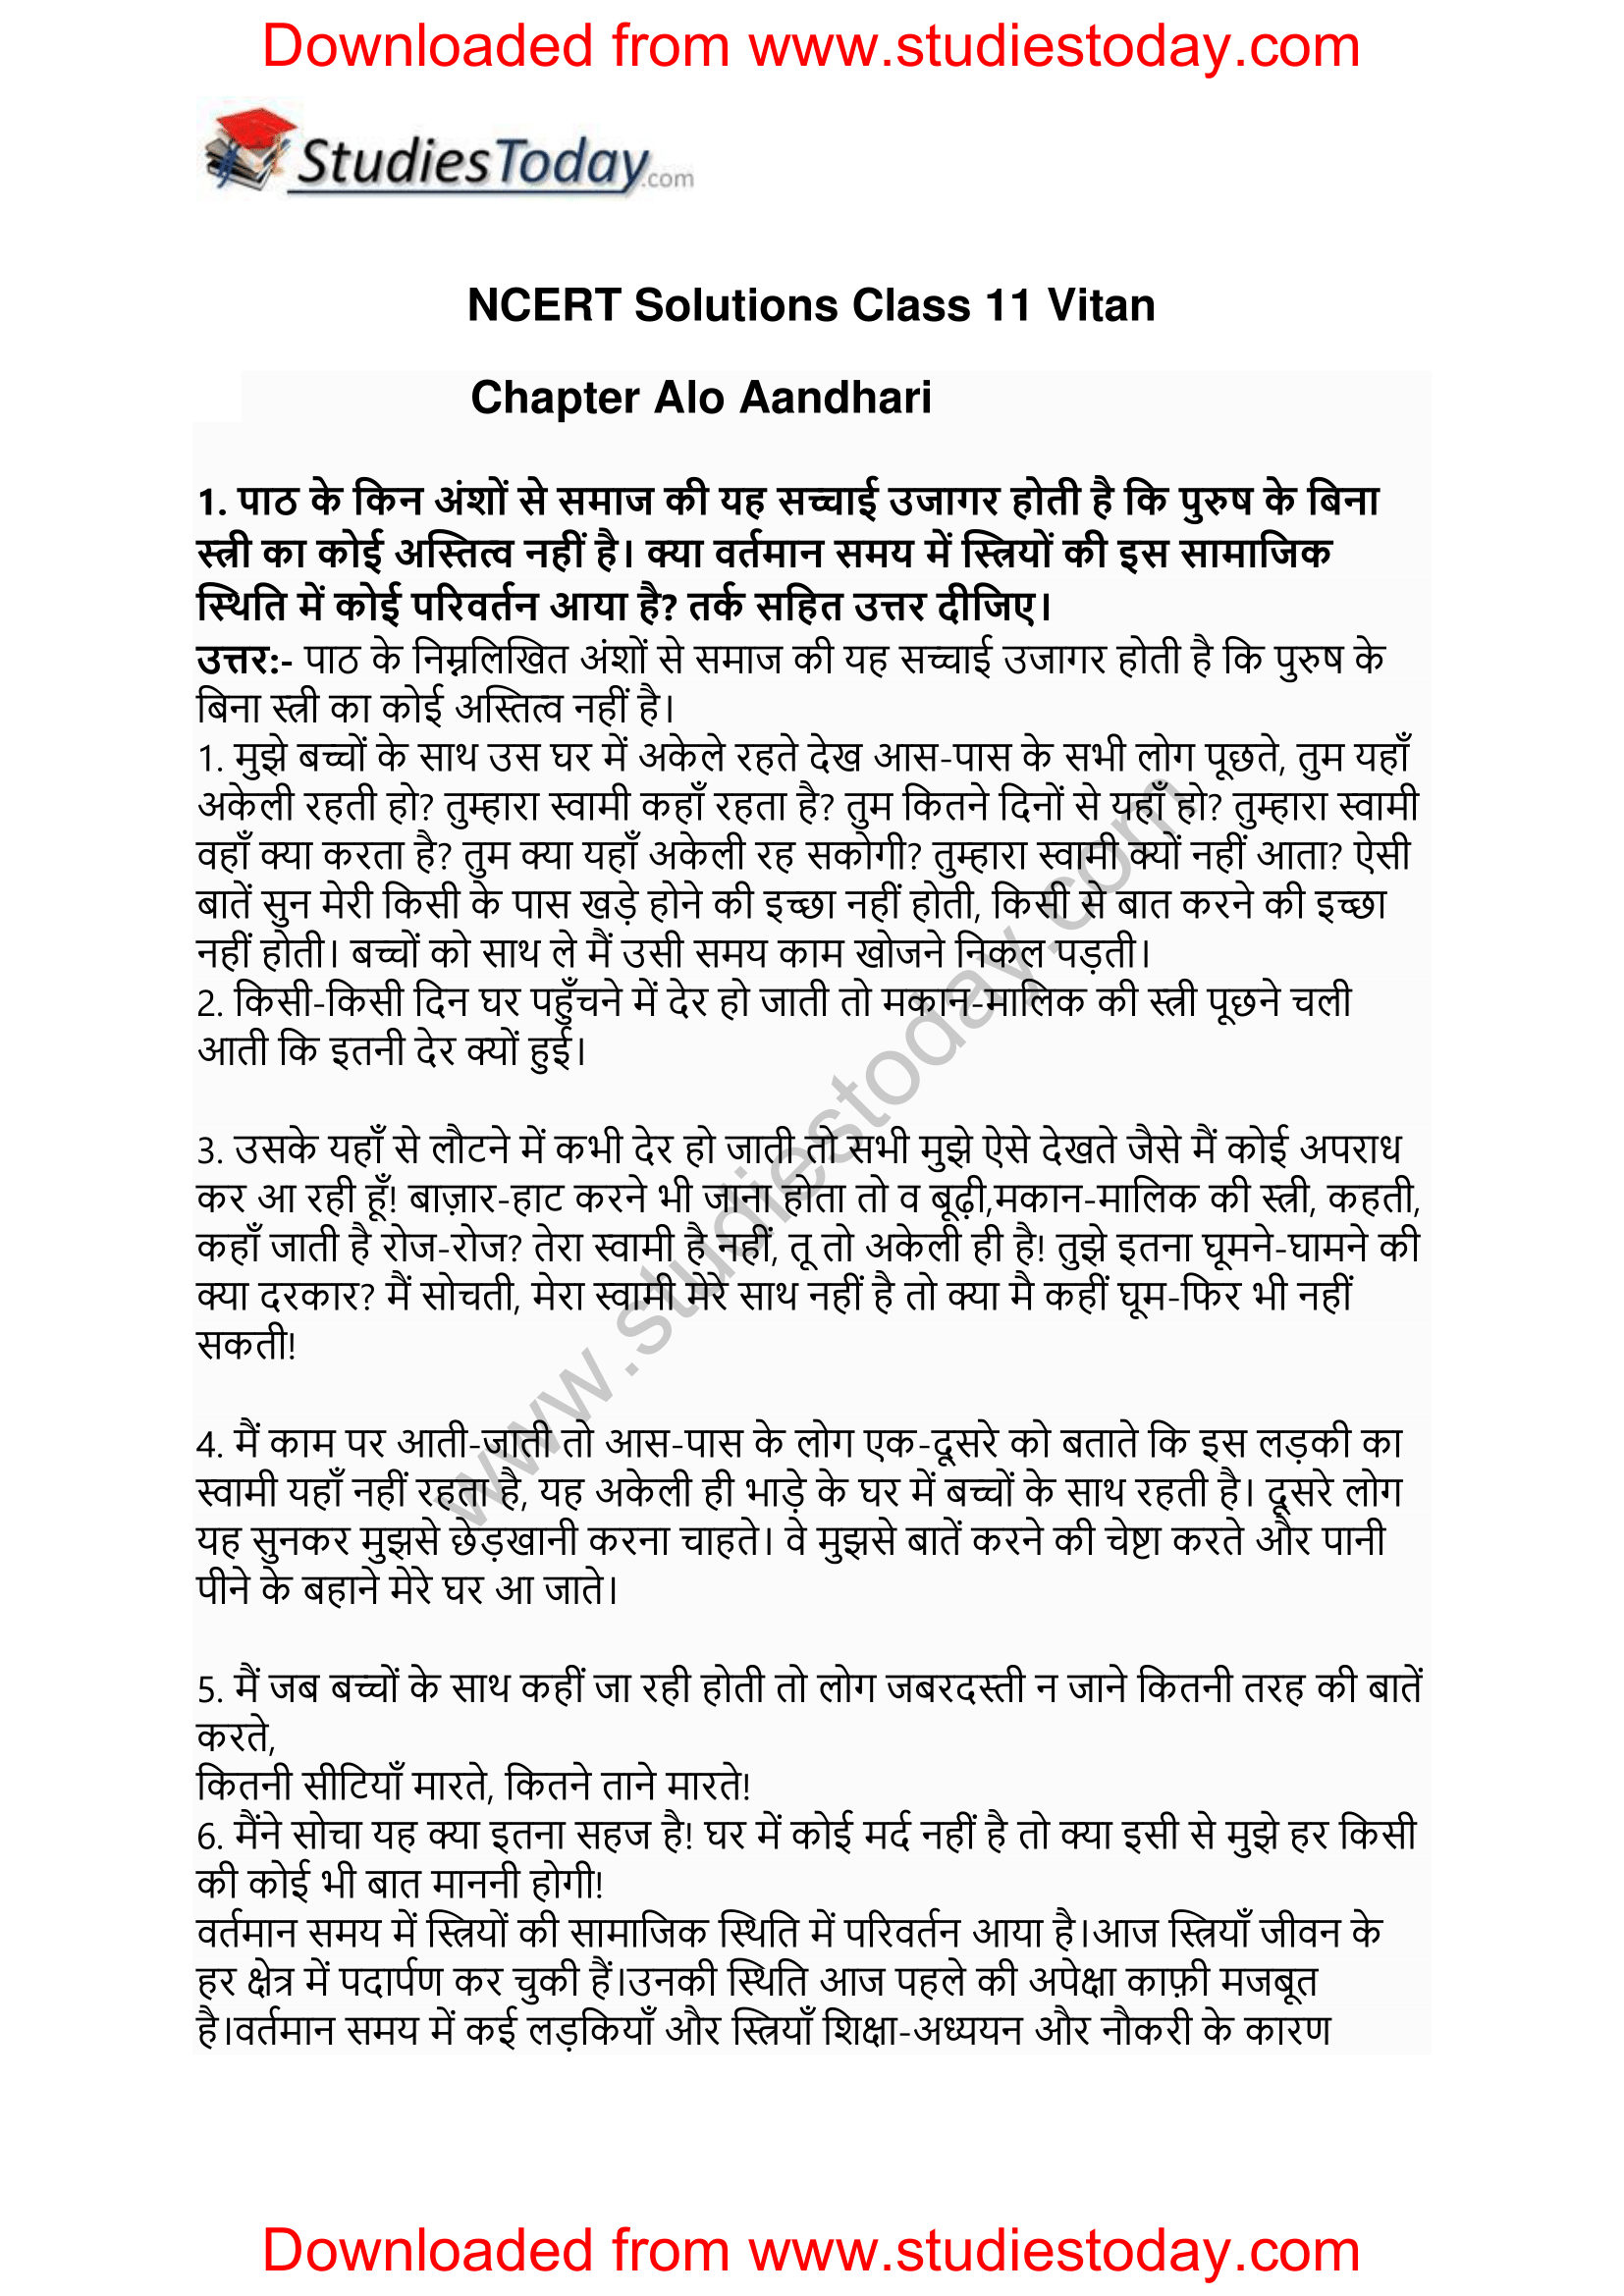 NCERT-Solutions-Class-11-Hindi-Vitan-Alo-Aandhari-1